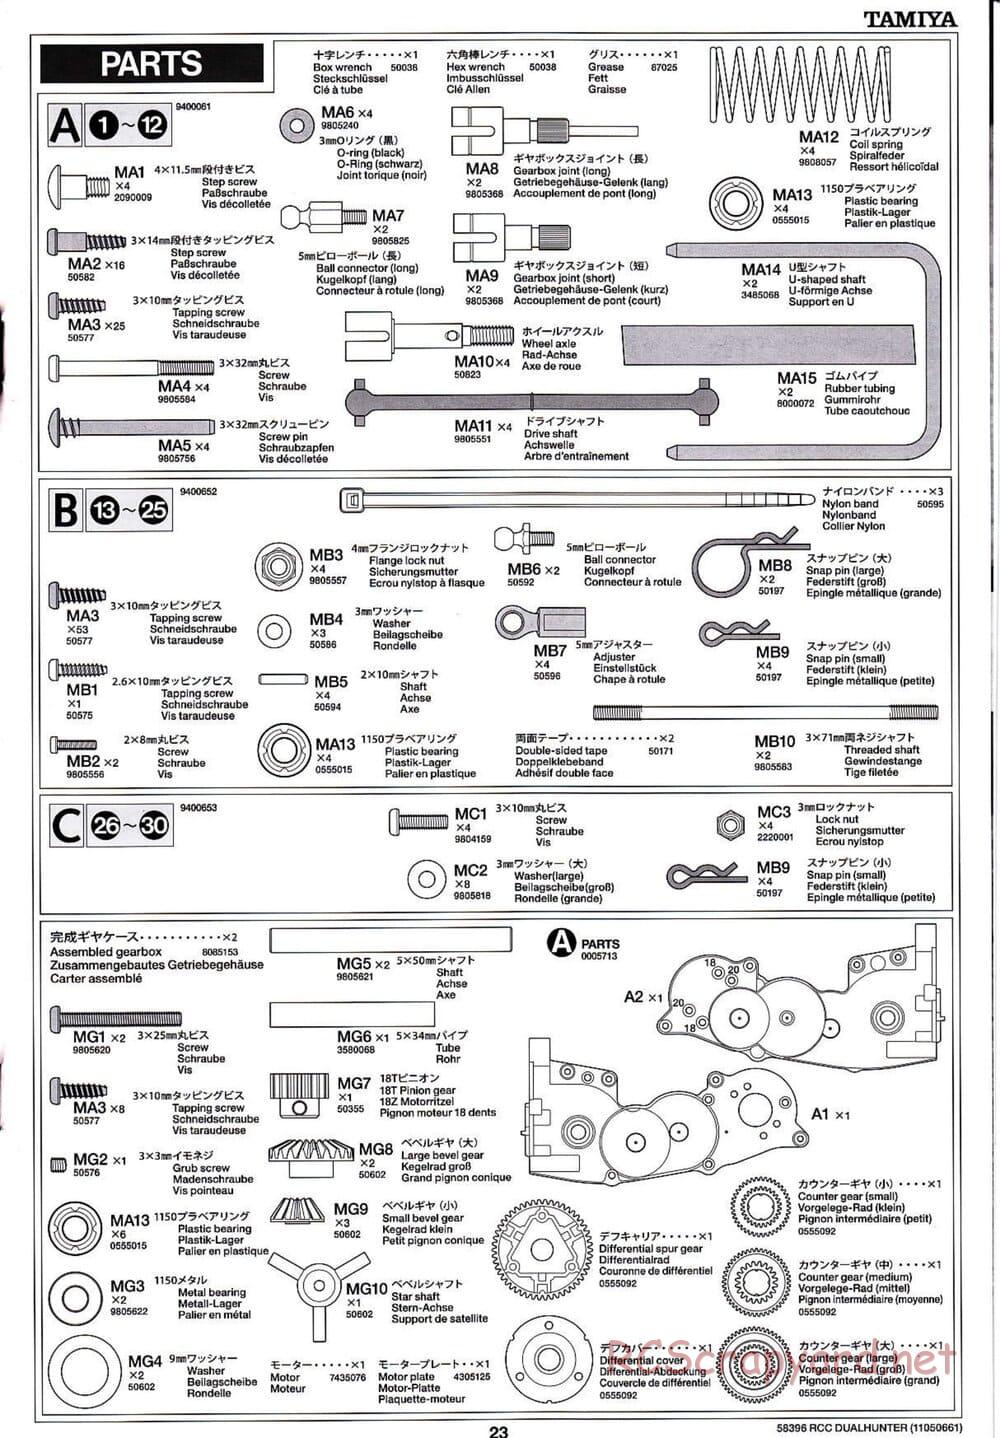 Tamiya - Dualhunter - WR-01 Chassis - Manual - Page 23